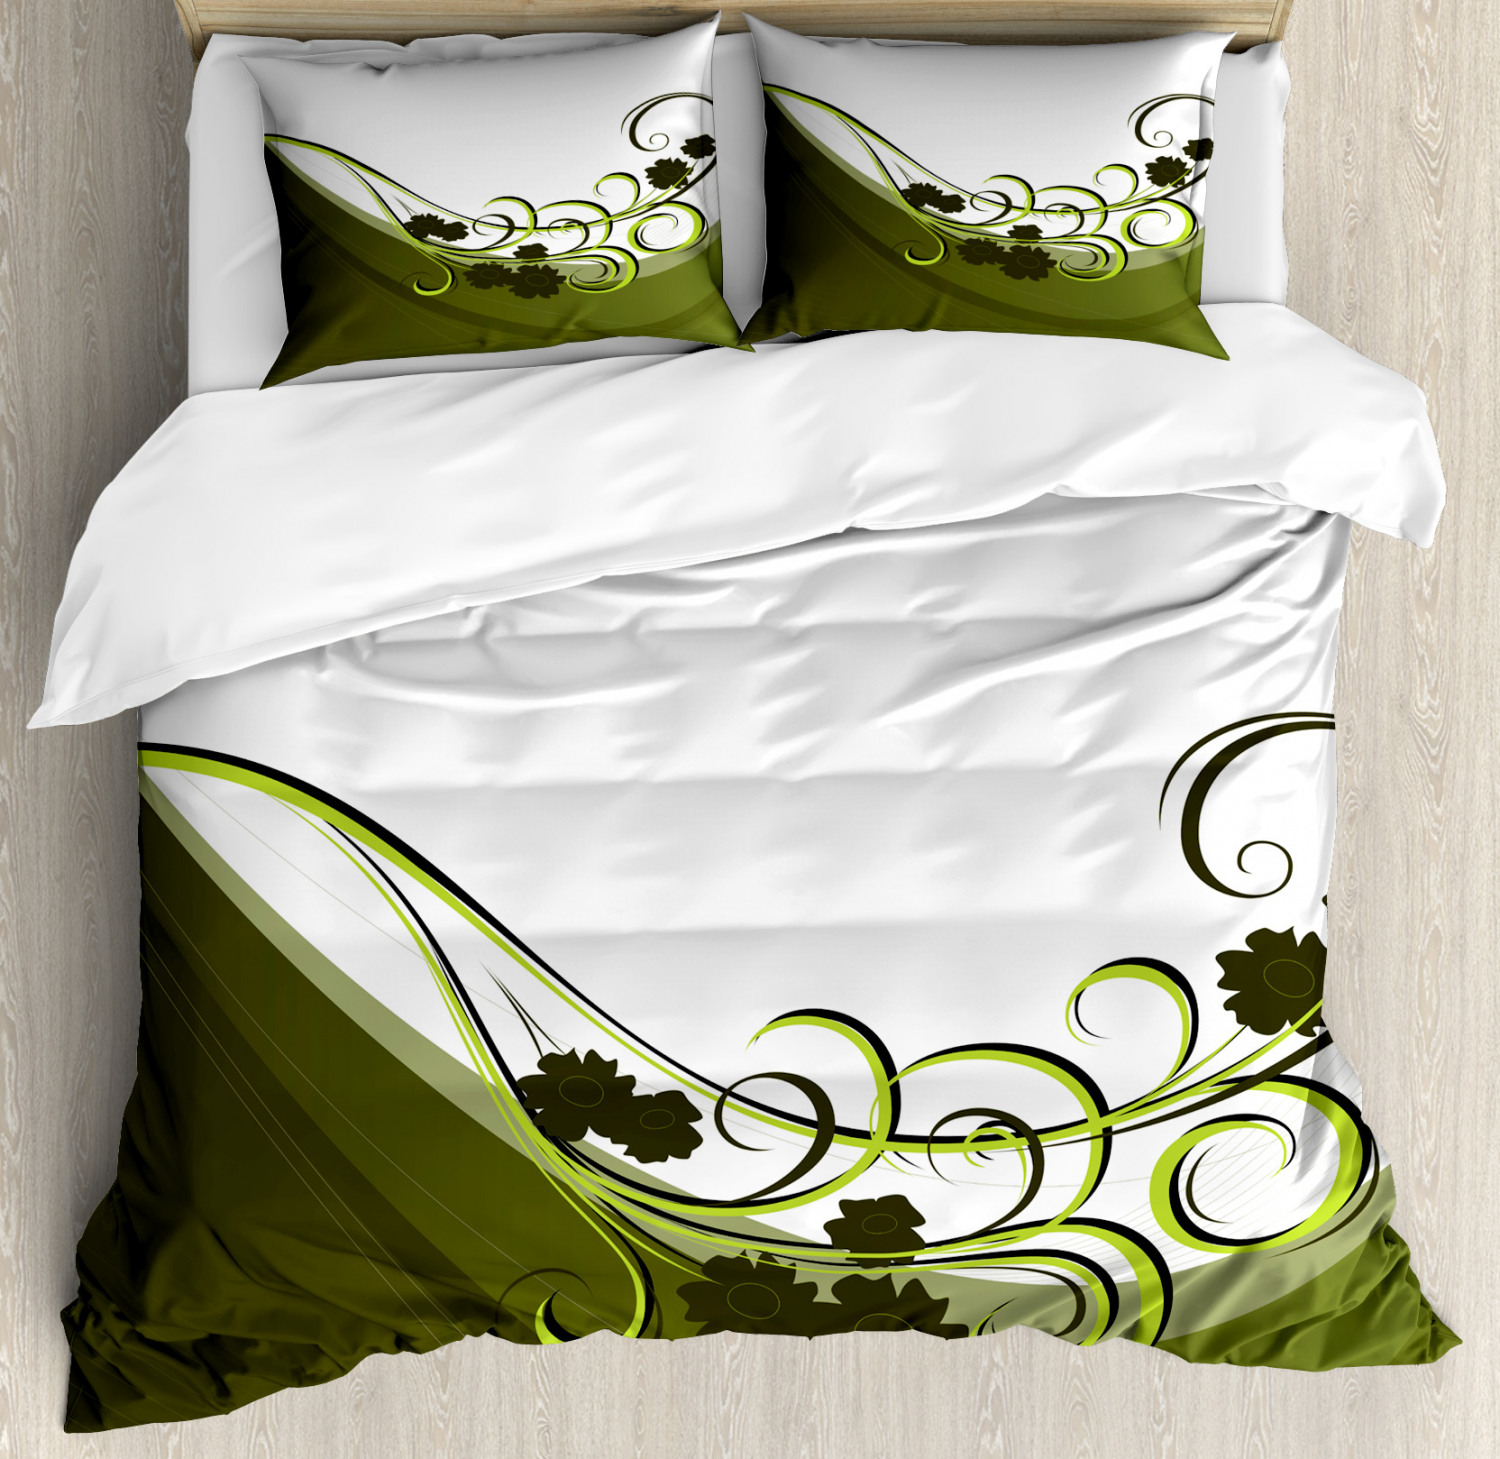 Olive Green Duvet Cover Set with Pillow Shams Wedding Inspired Print